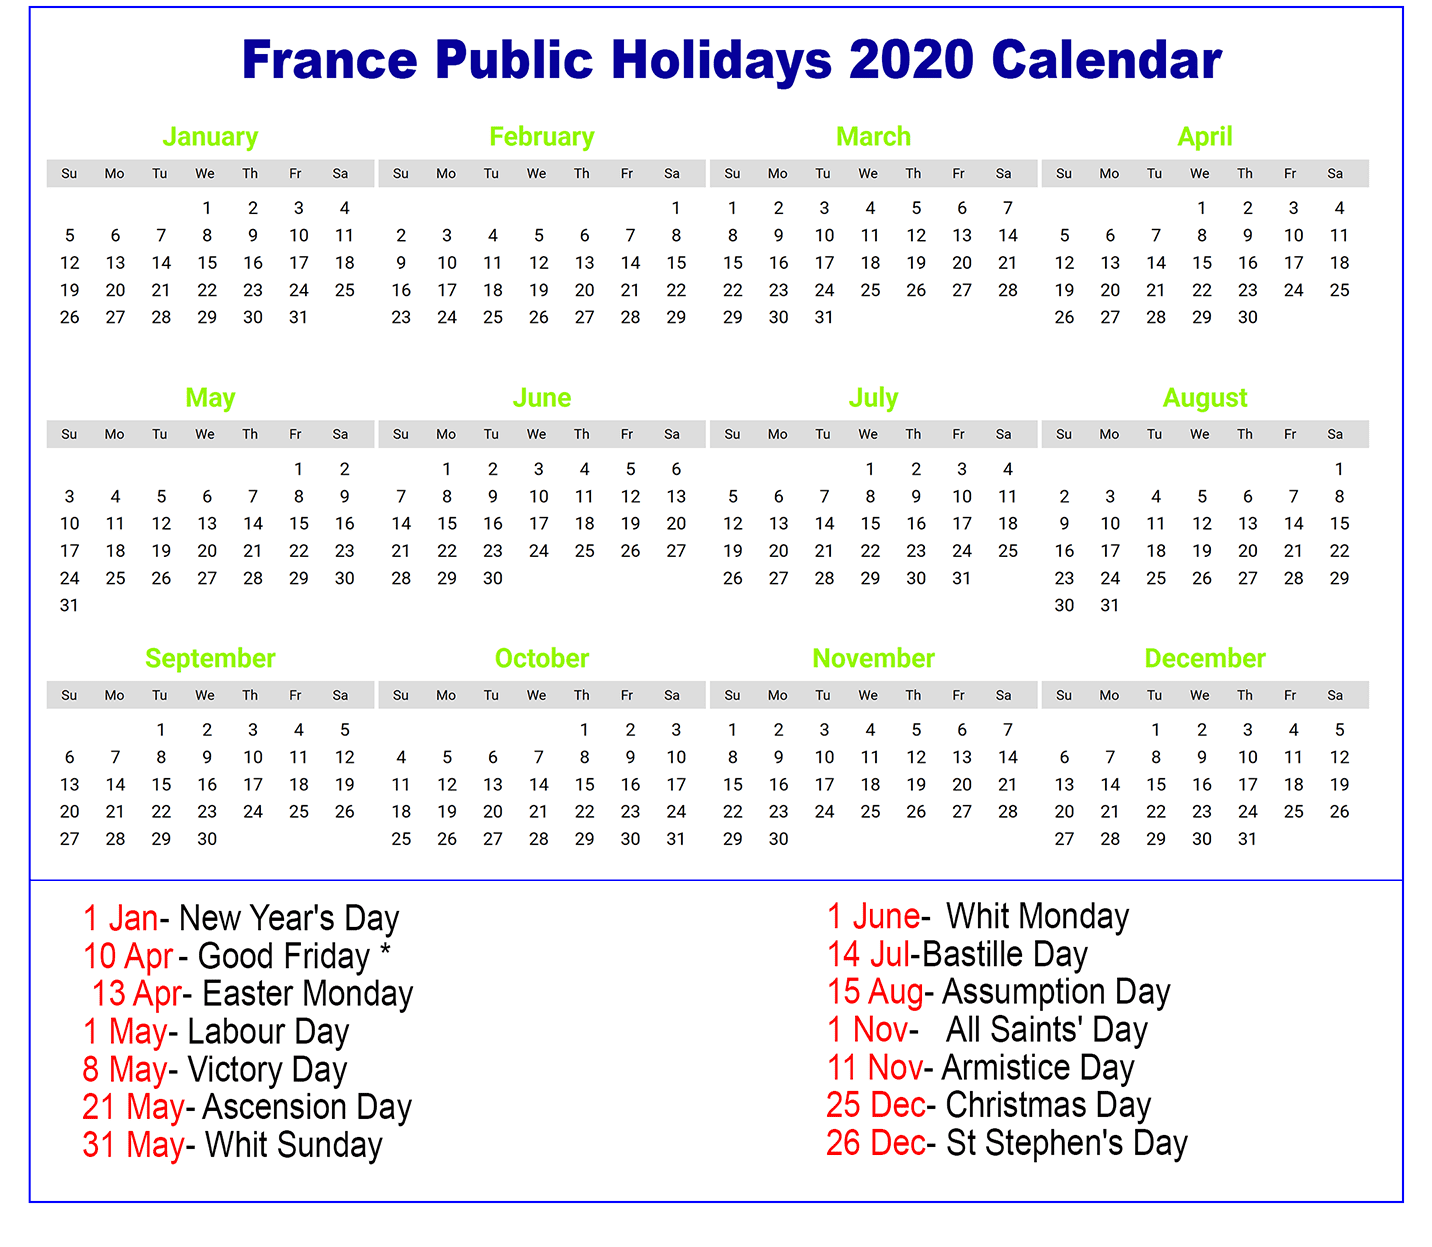 France Public Holidays 2020 Calendar | France Holidays 2020